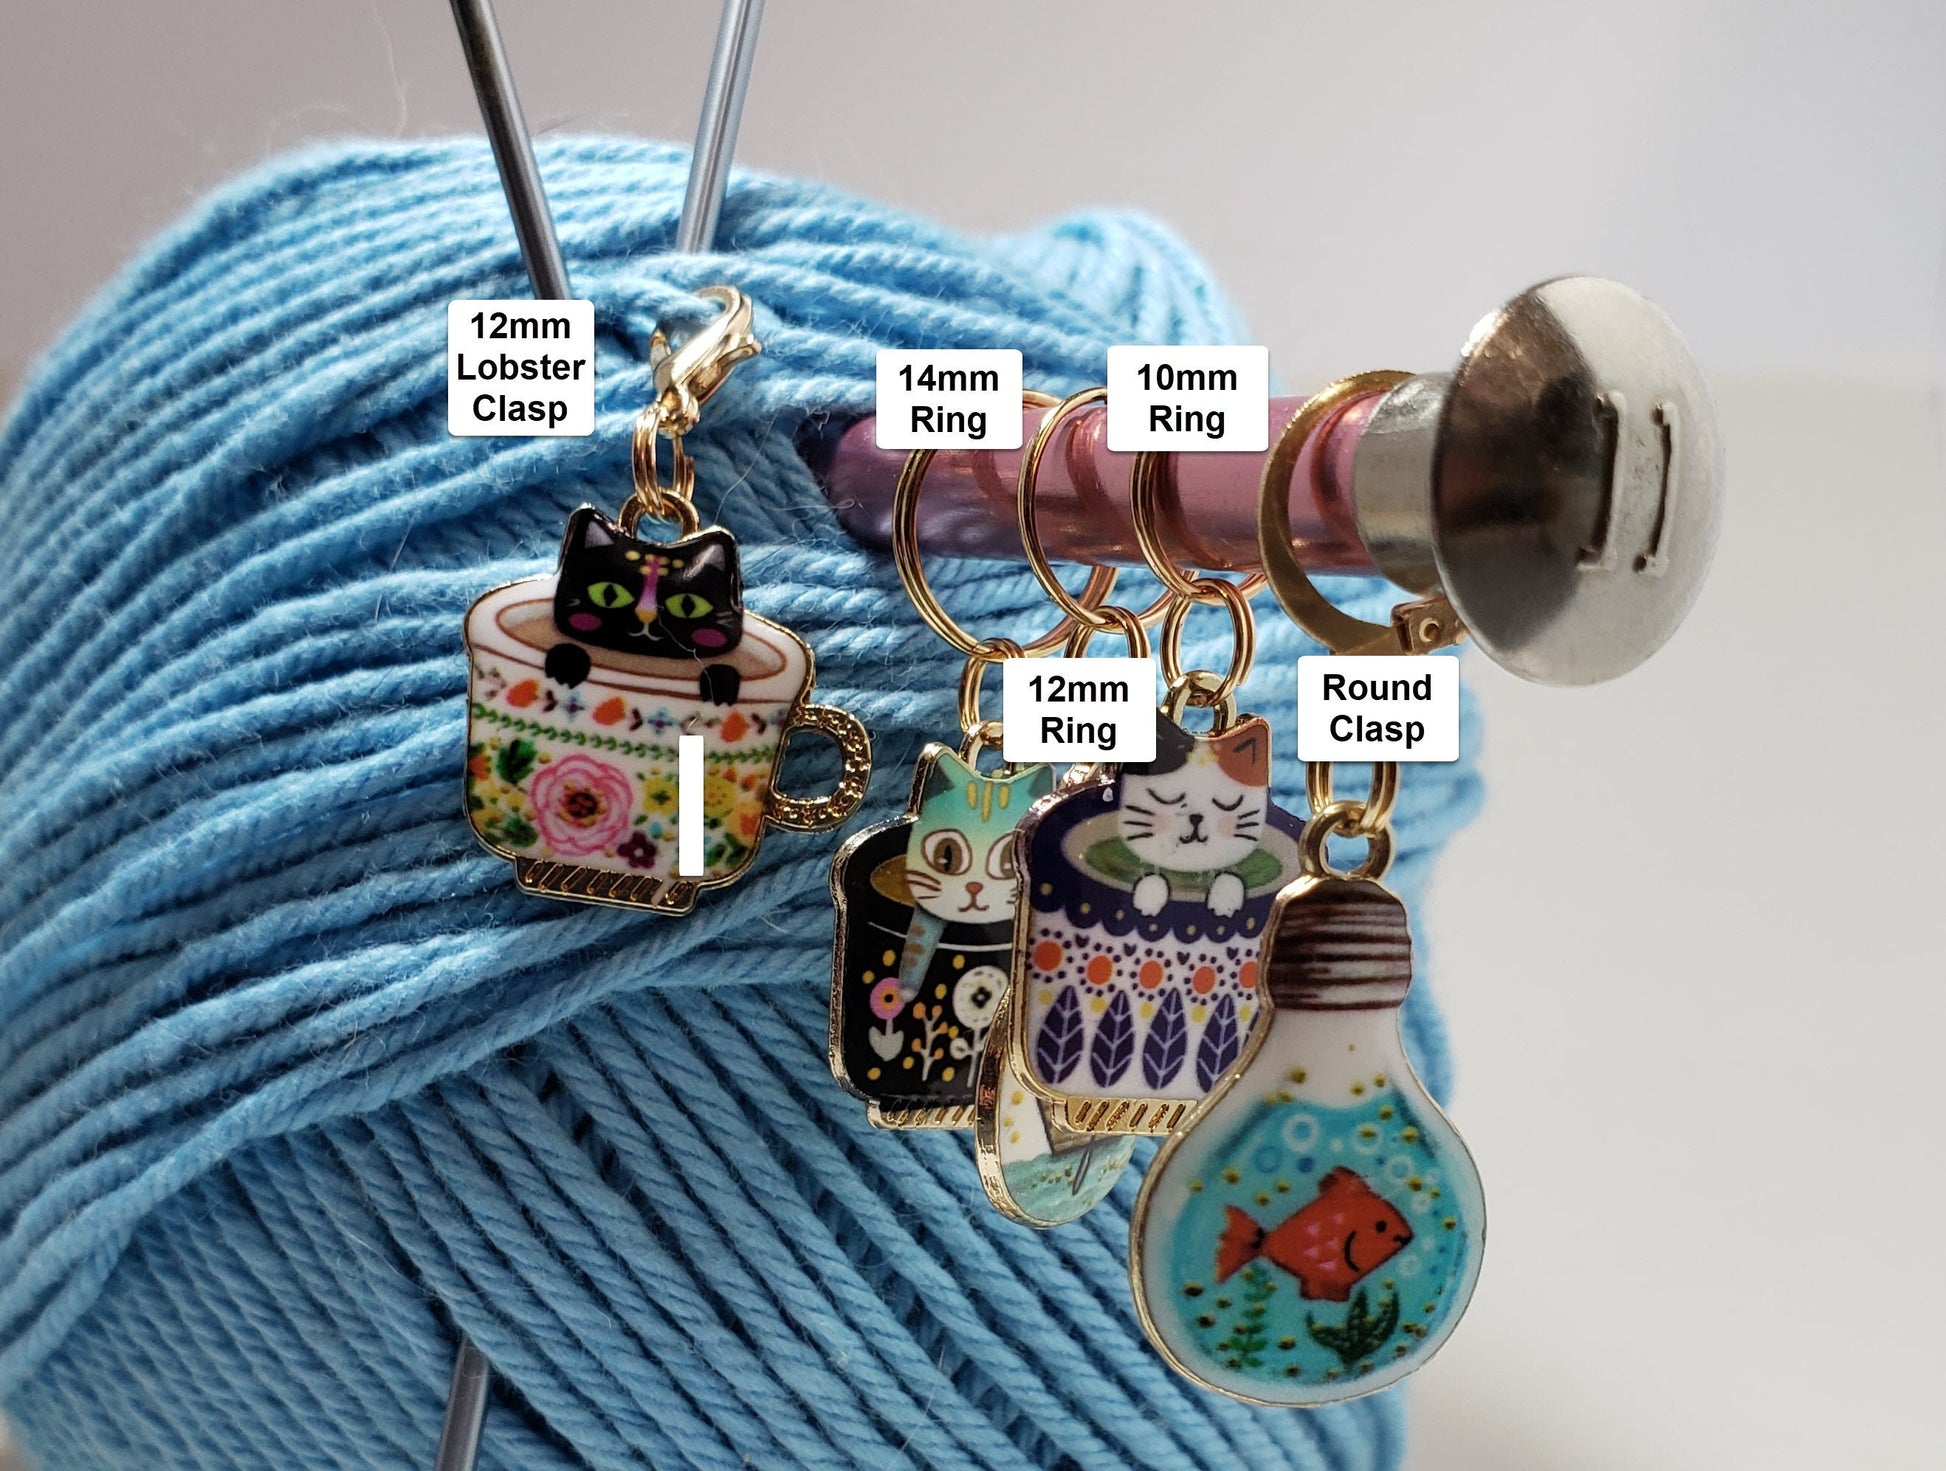 Orange Tabby Cat Stitch Markers for Knitting, 4pc | Crochet stitch marker, progress keeper, project bag charms, crochet accessory